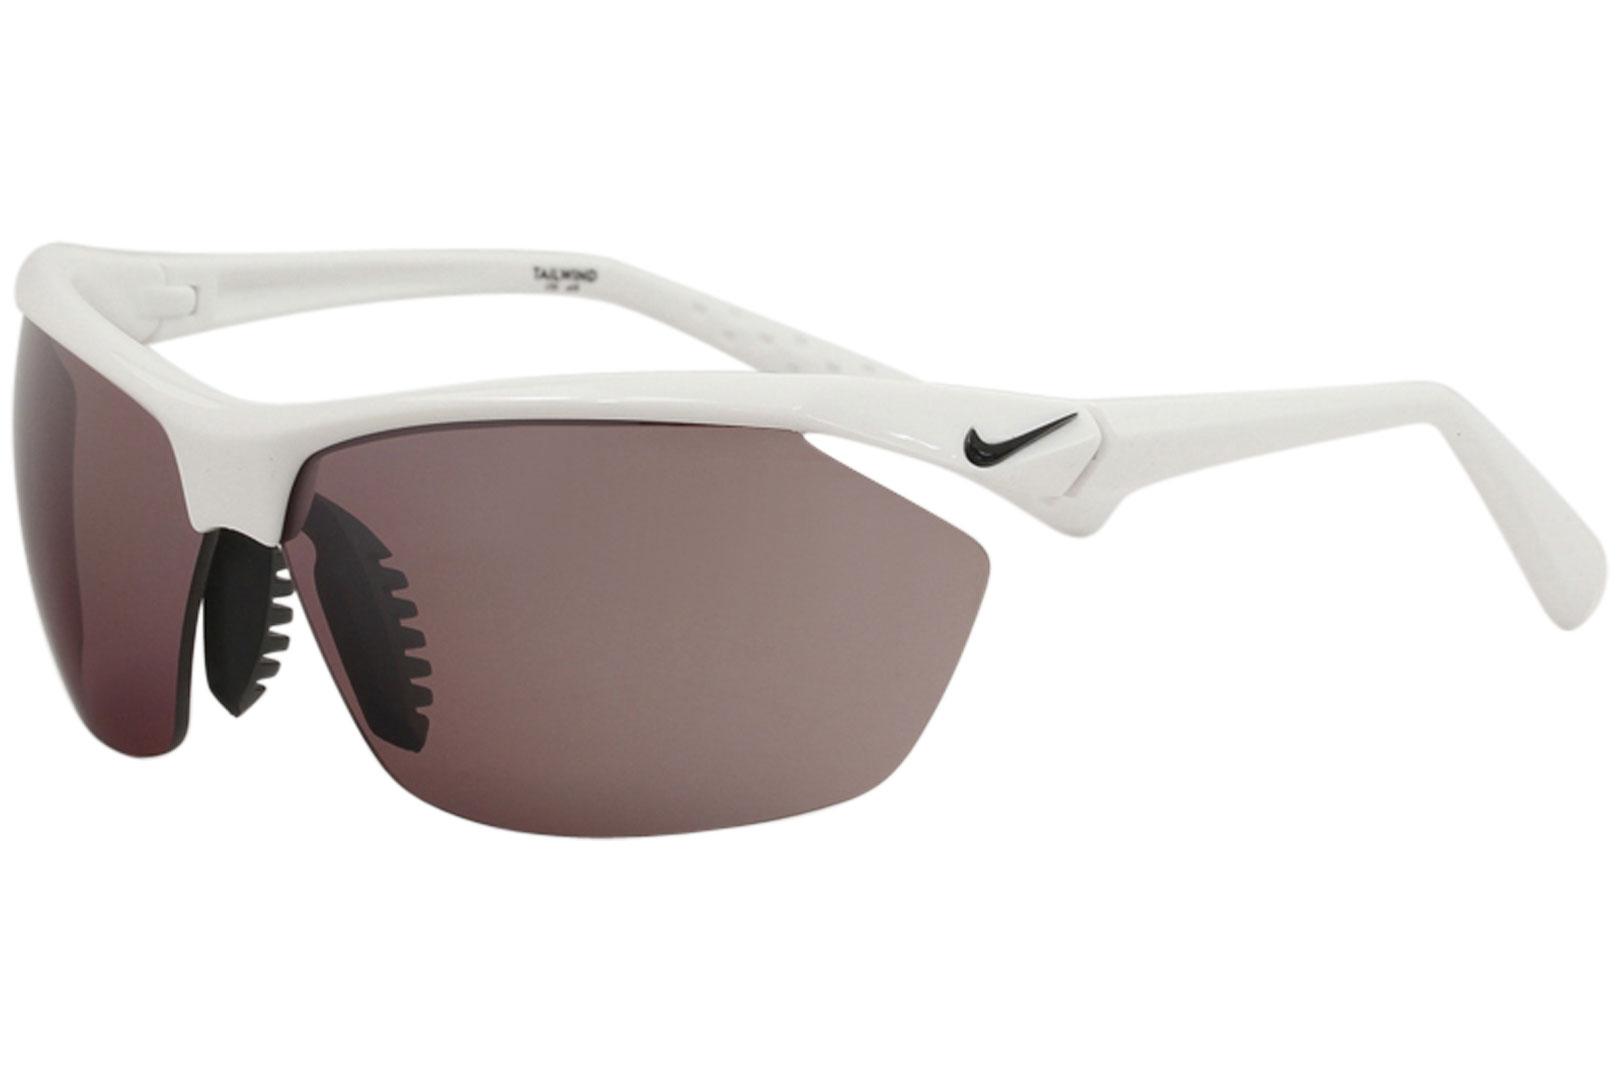 Huracán exagerar teoría Nike Men's Tailwind Sport Rectangle Sunglasses | EyeSpecs.com